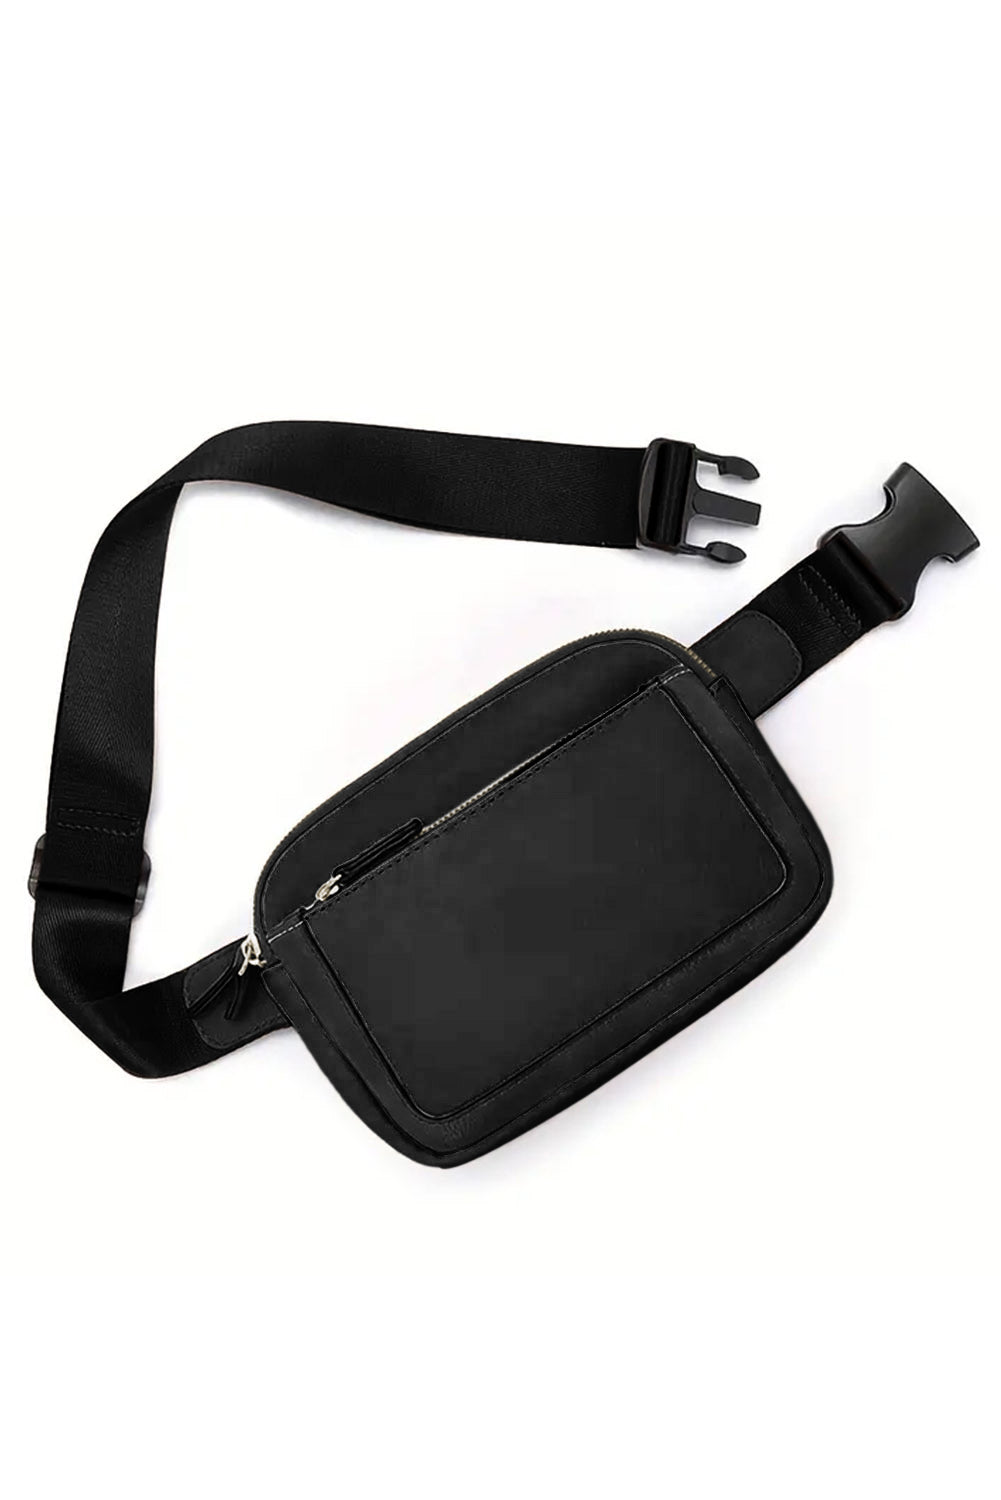 Adjustable Strap Mini PU Leather Crossbody Bag - handbag at TFC&H Co.